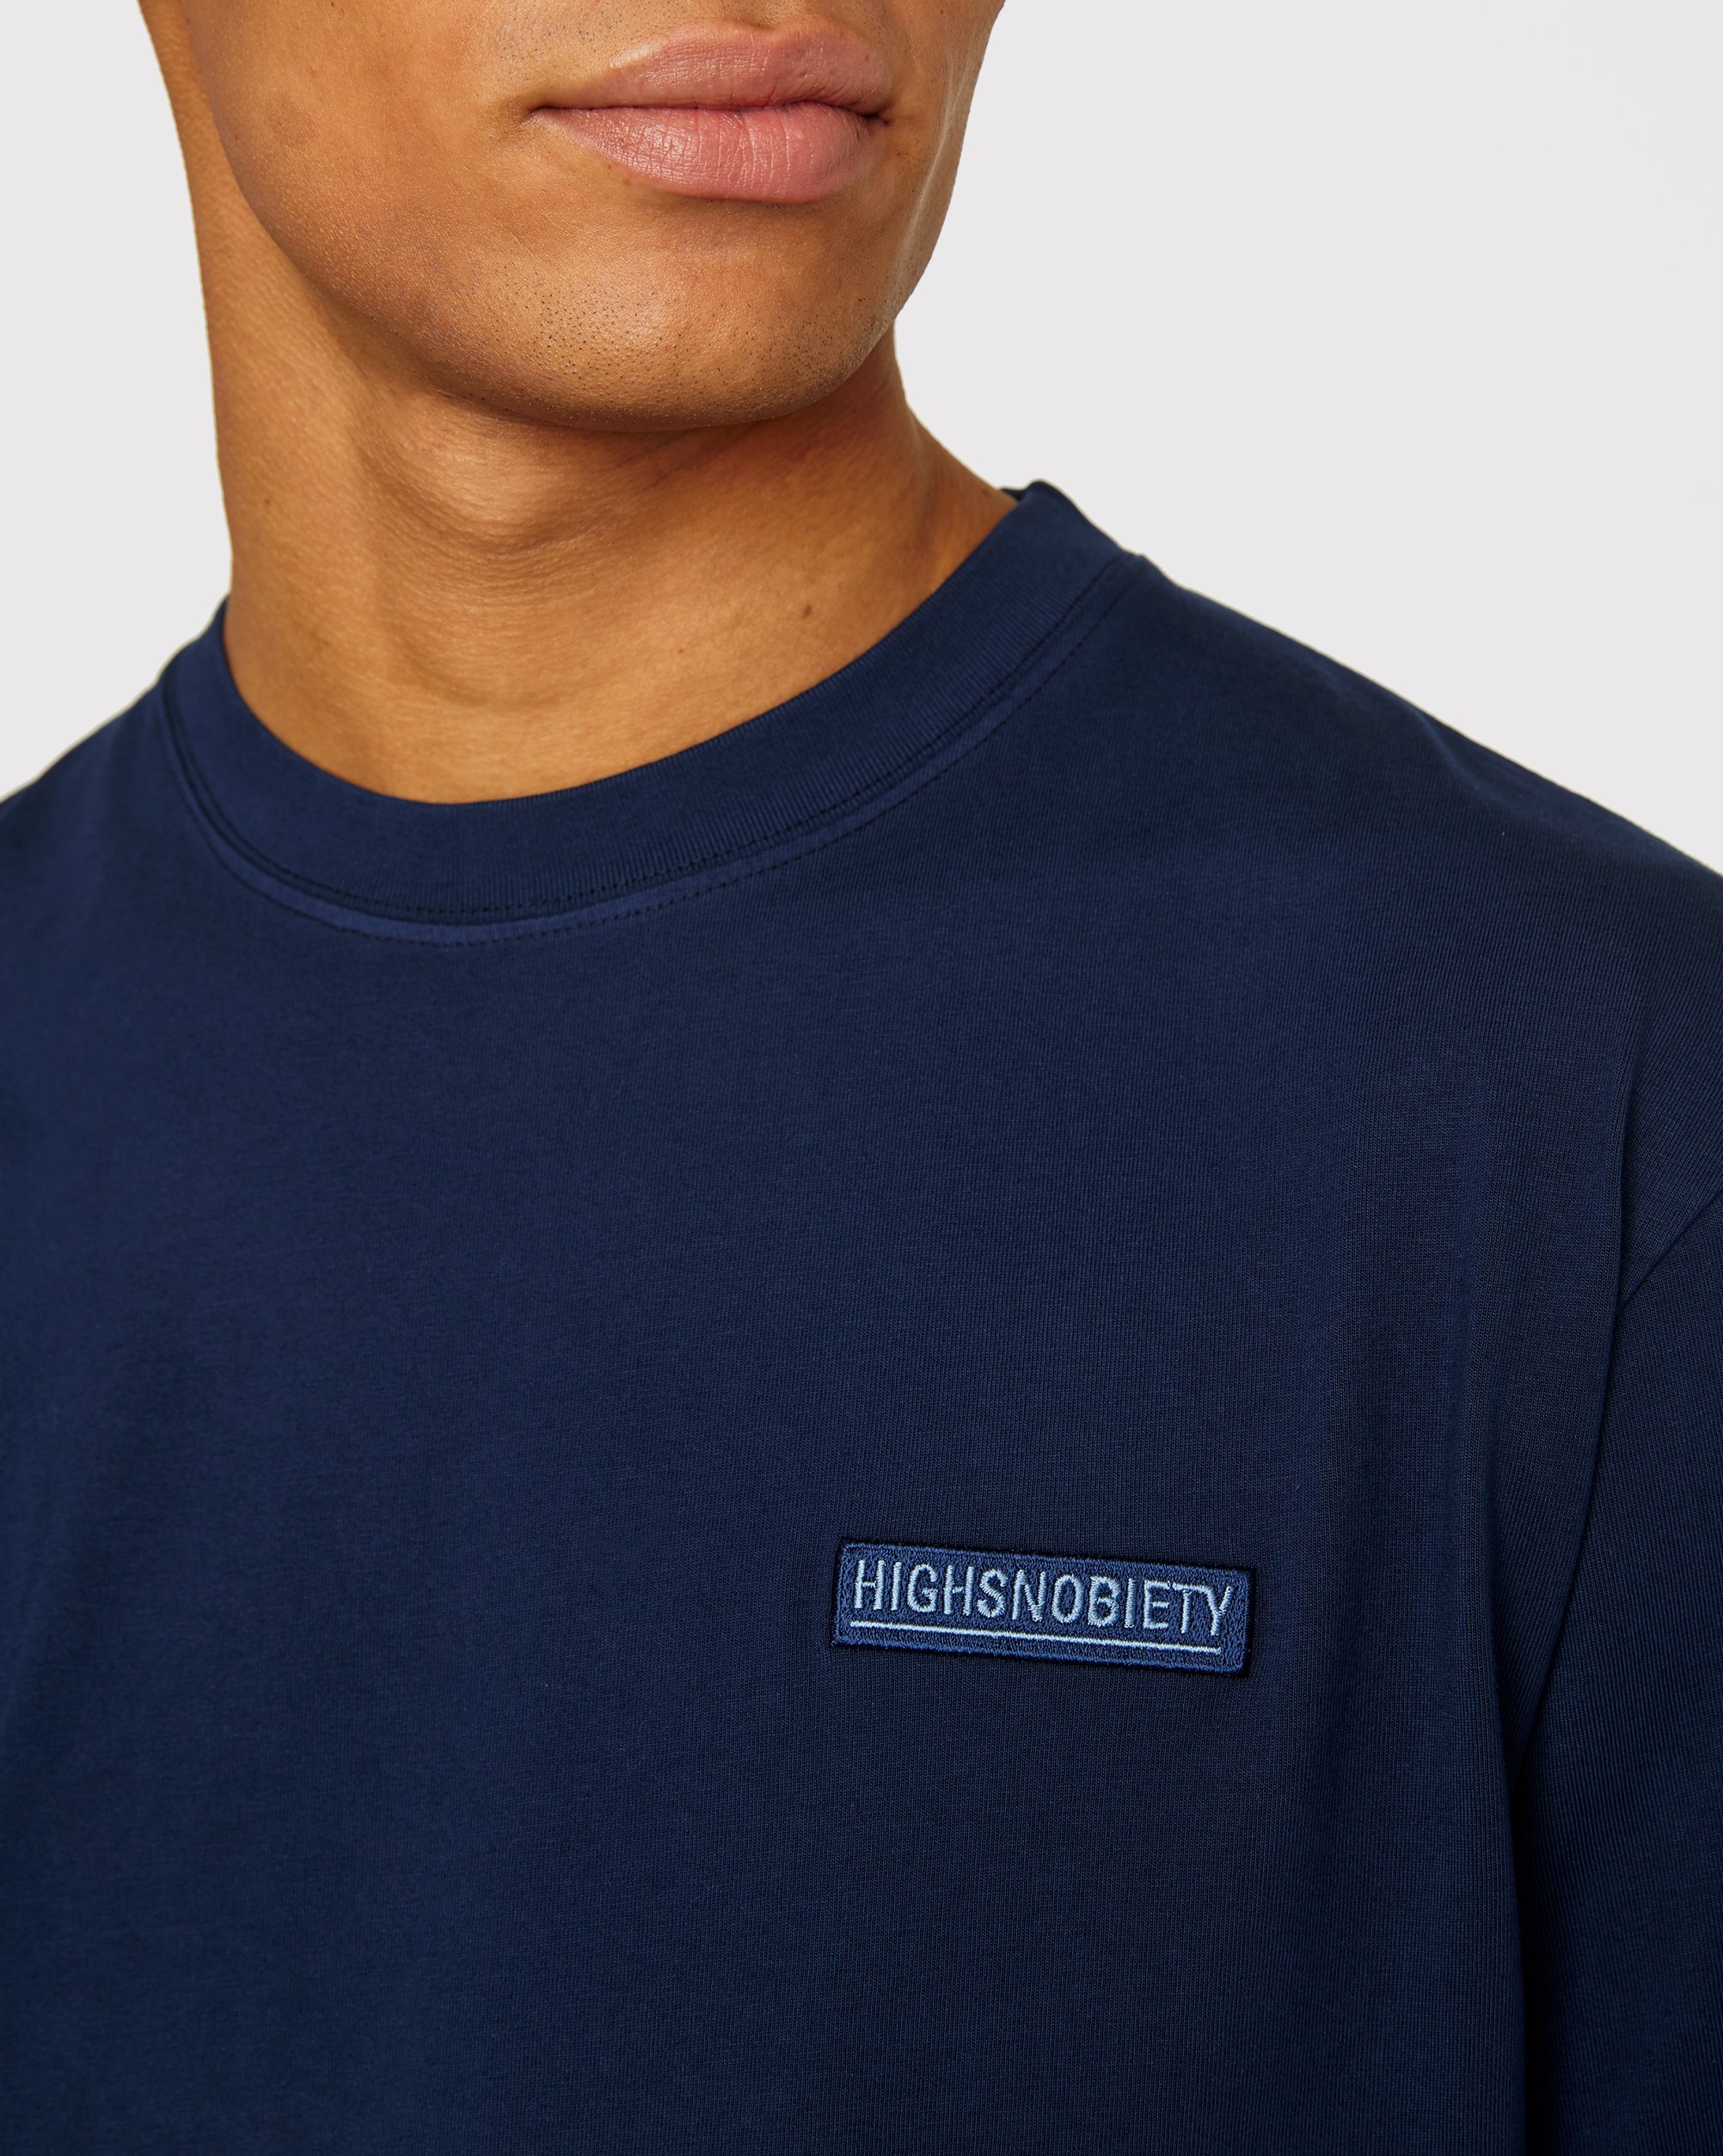 Highsnobiety - Staples T-Shirt Navy - Clothing - Blue - Image 5